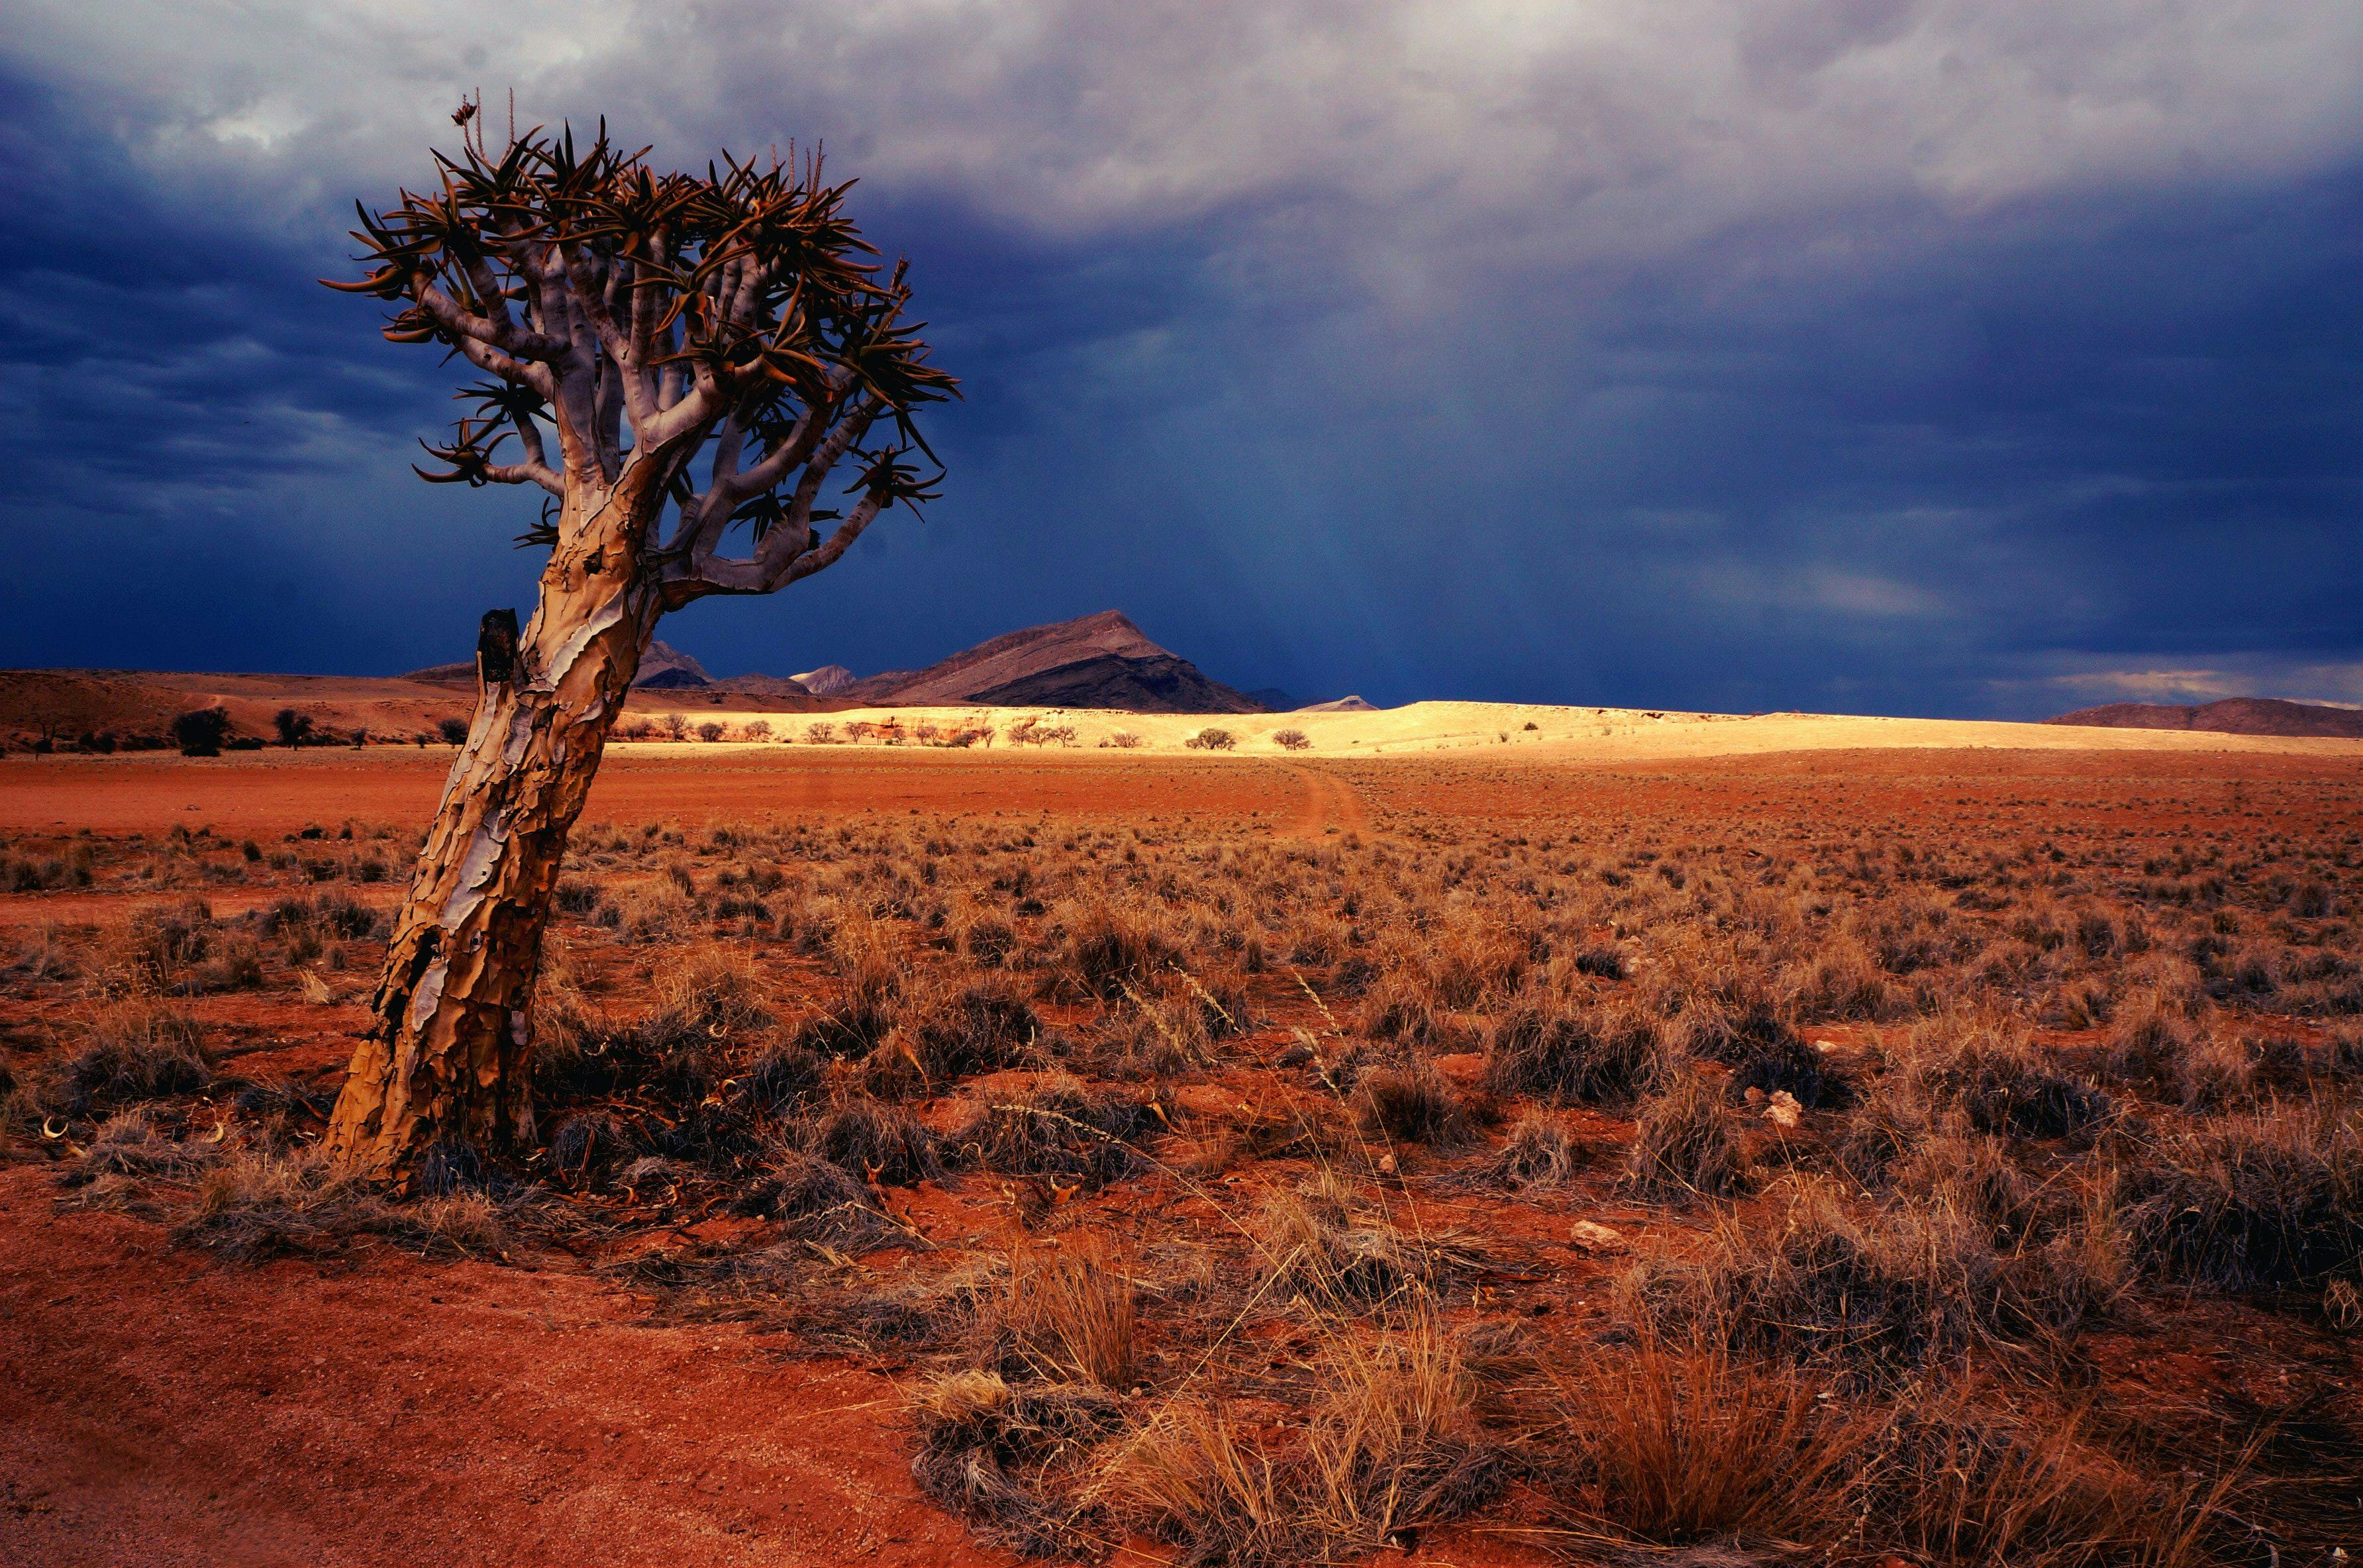 Dramatic sky over desert in Namibia in Africa.